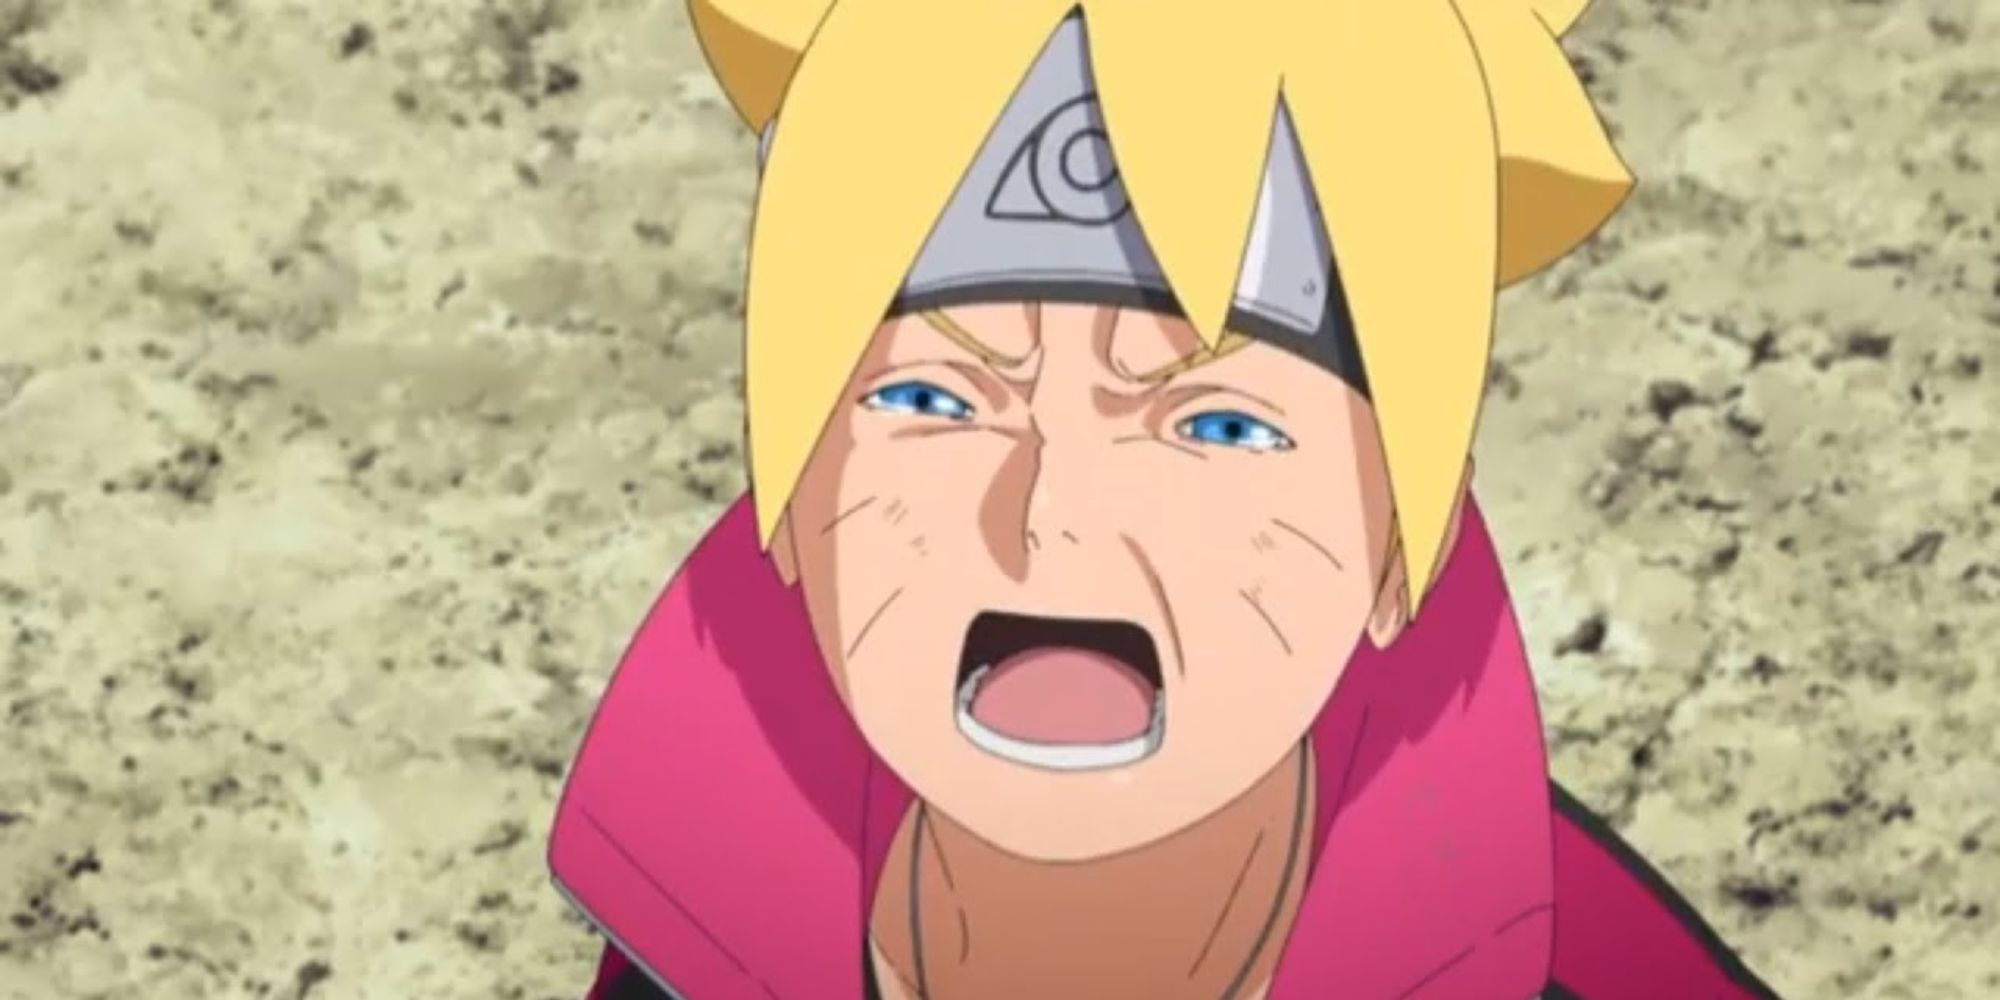 Naruto Ultimate Ninja Storm 5 Isn't Happening Says Dev, But Can't